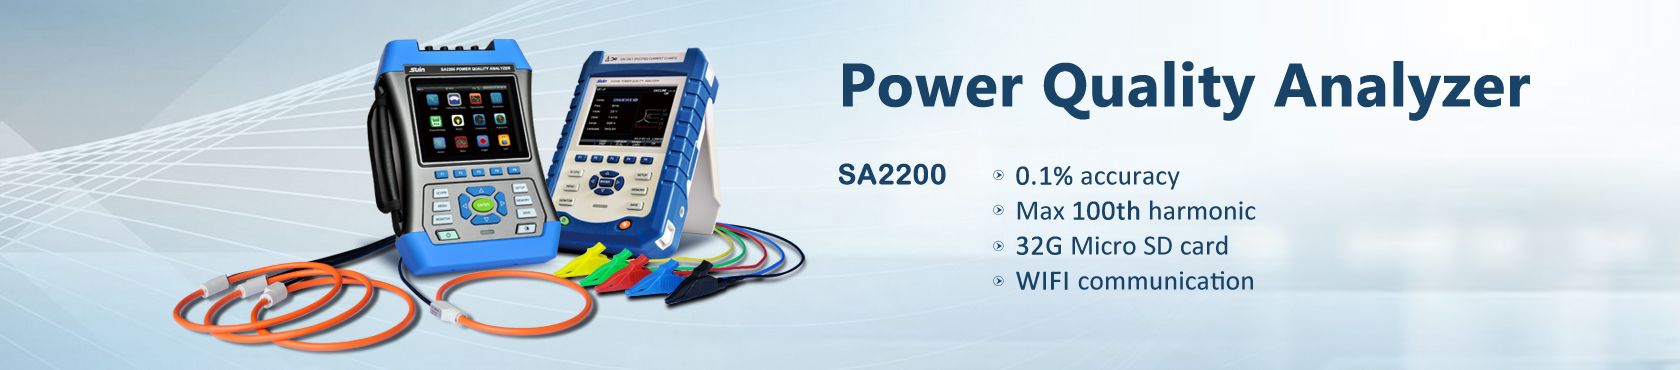 SA2200 Portable Power Analyzer